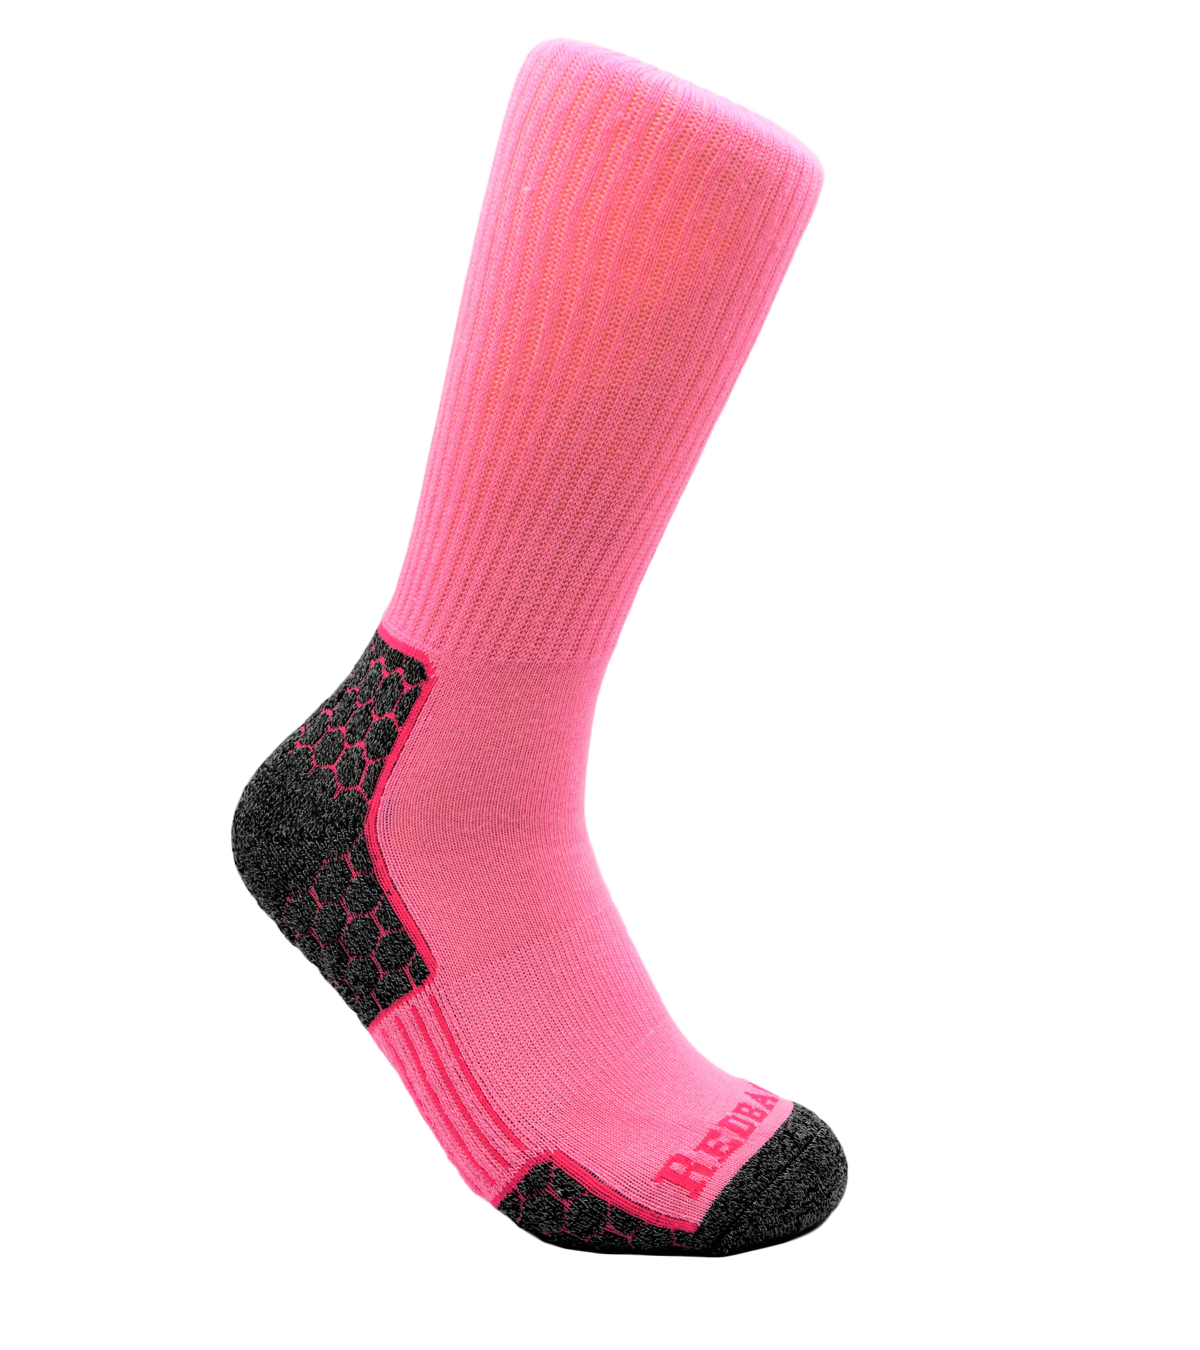 Rebel Crew Socks in Pink Adult